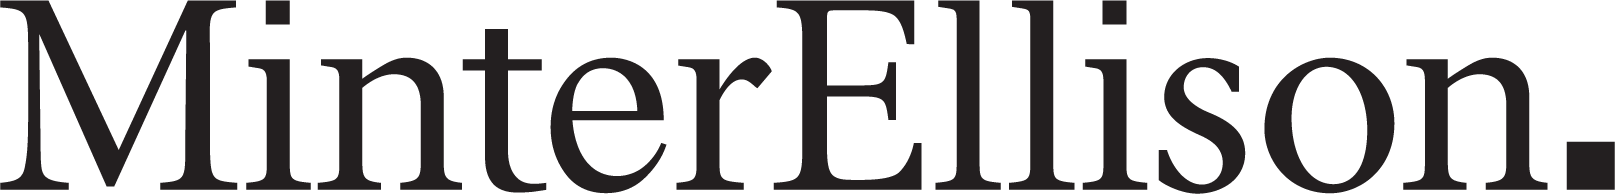 Minter Ellison logo